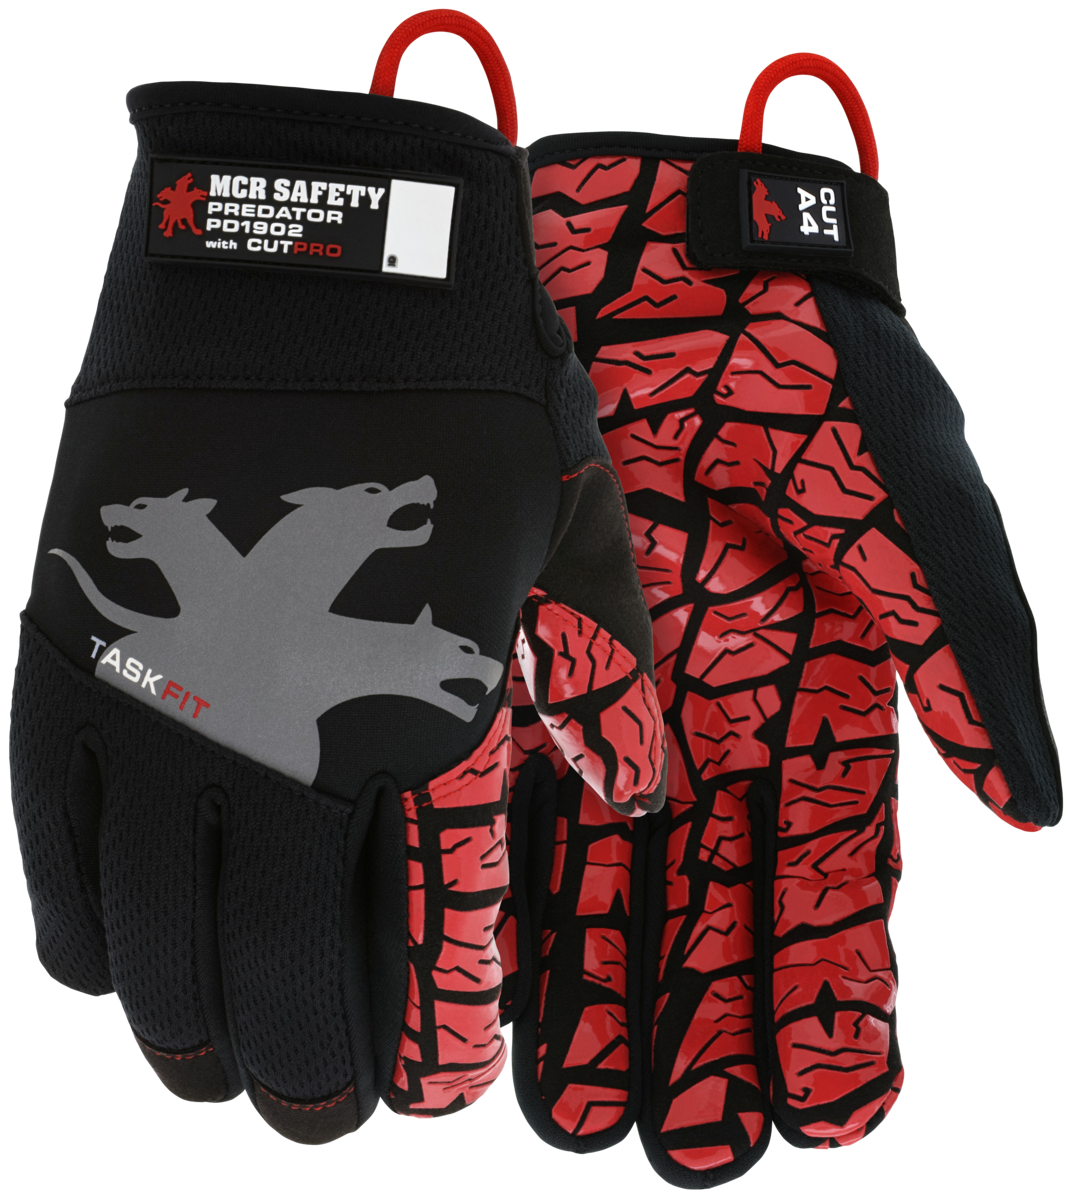 PD1902 - Predator® Taskfit CutPro Mechanics Glove